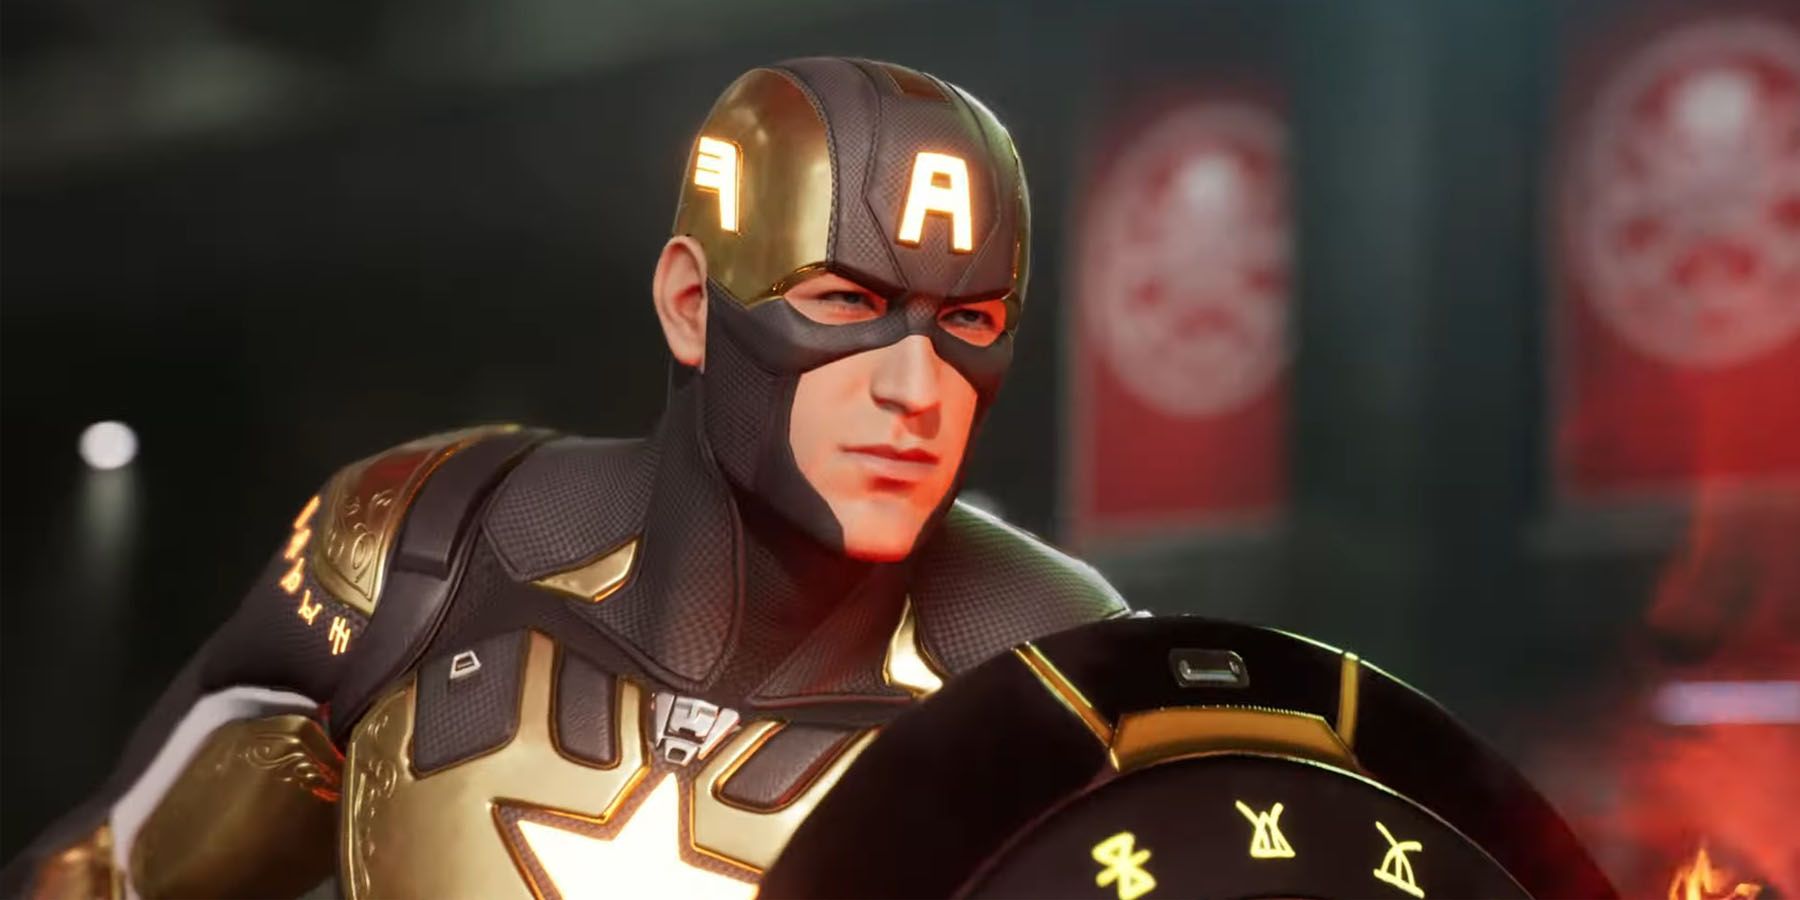 Marvel's Midnight Suns Captain America Gameplay Showcased